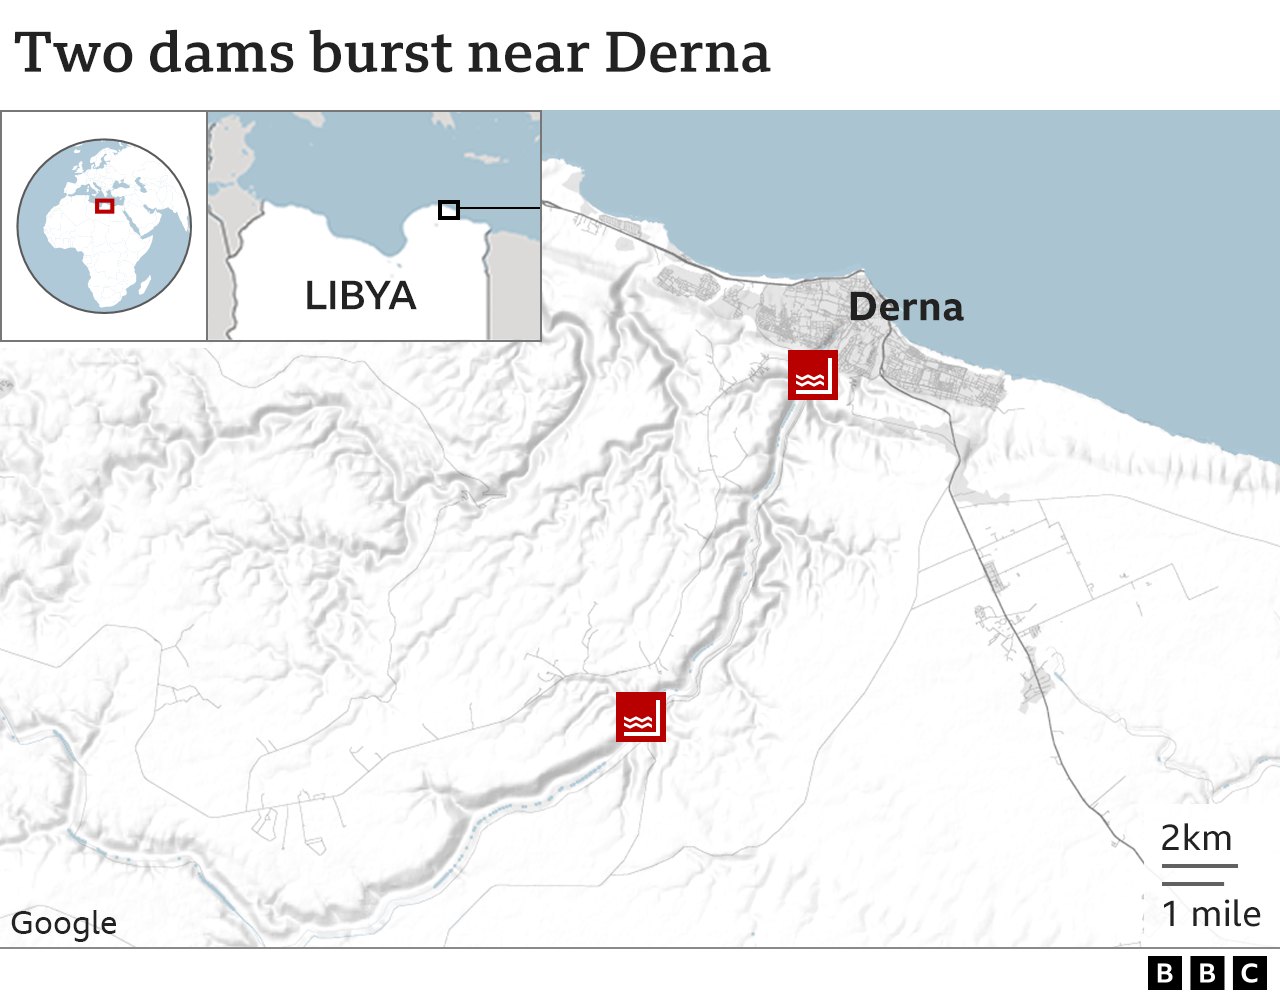 Map showing the dams that burst near Derna, Libya